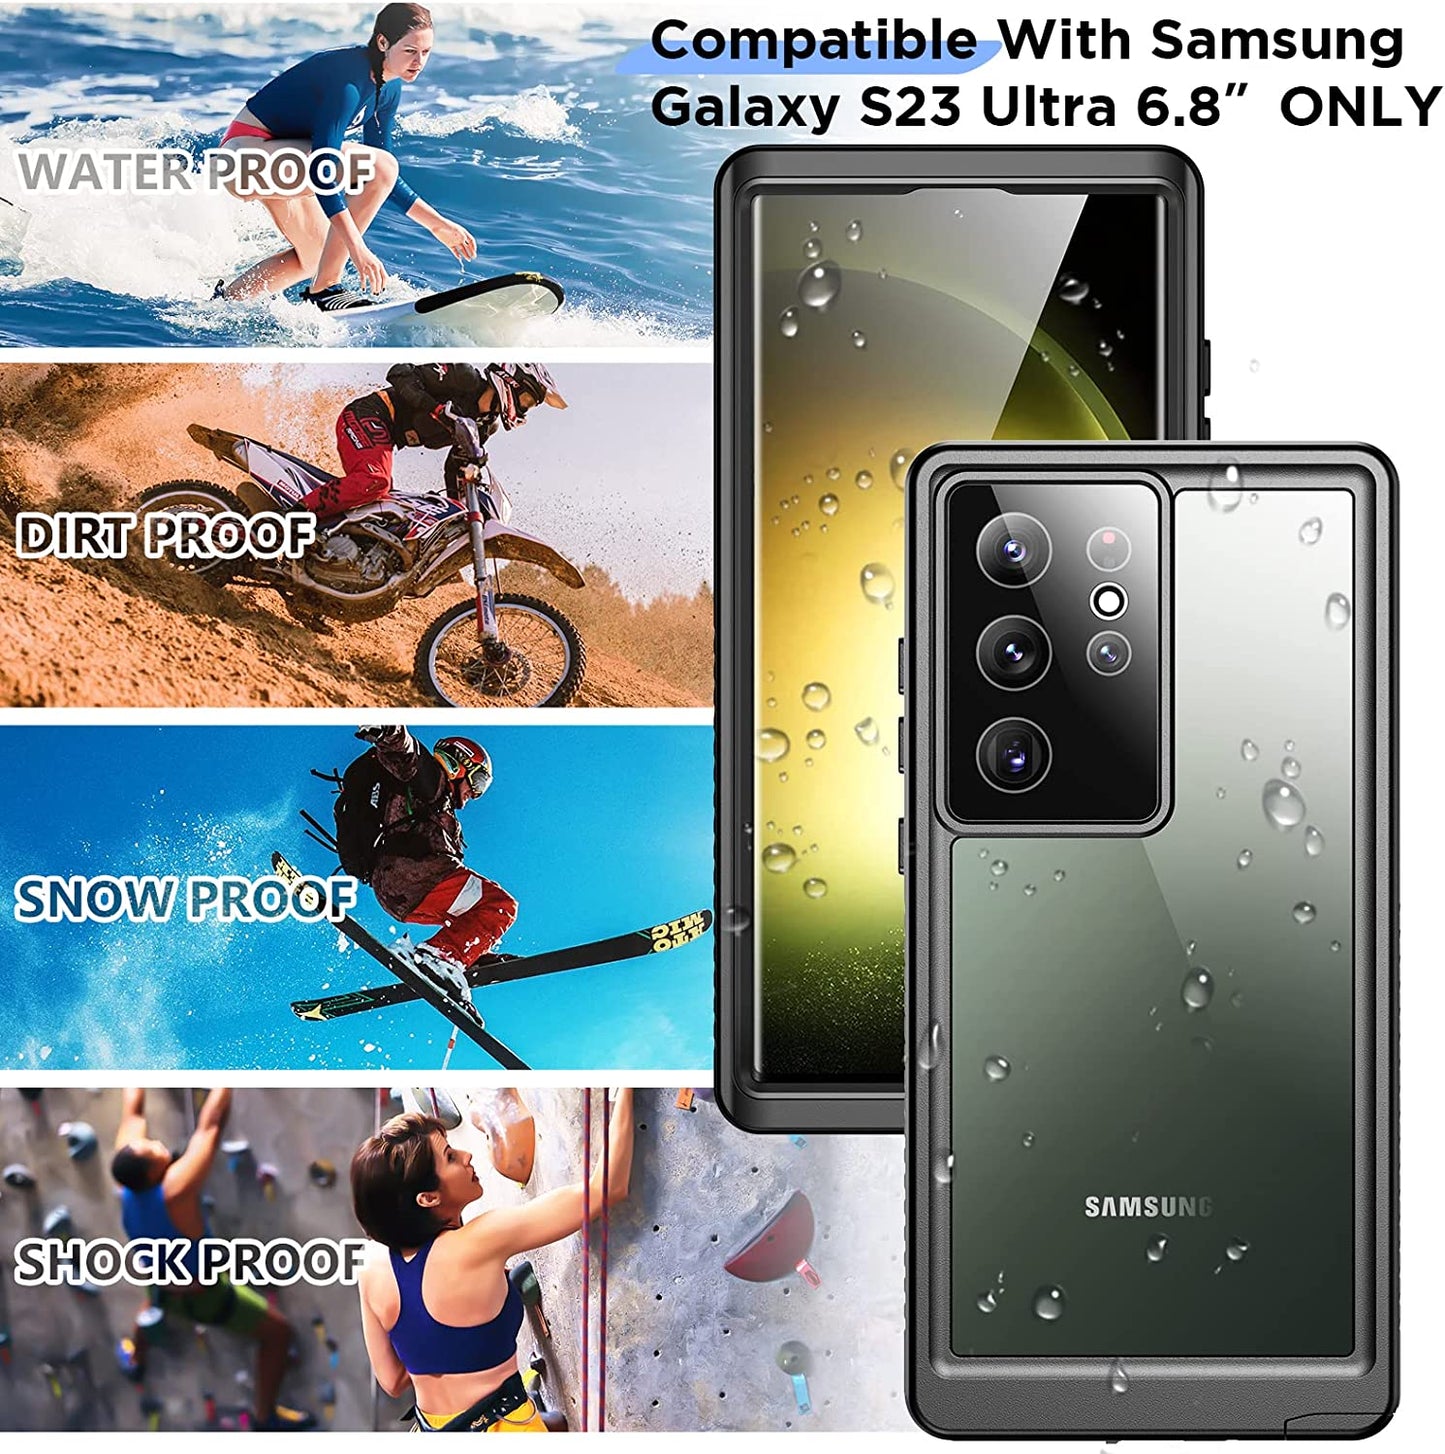 Waterproof Samsung Galaxy S23 Ultra Case Built-in Lens & Screen Protector